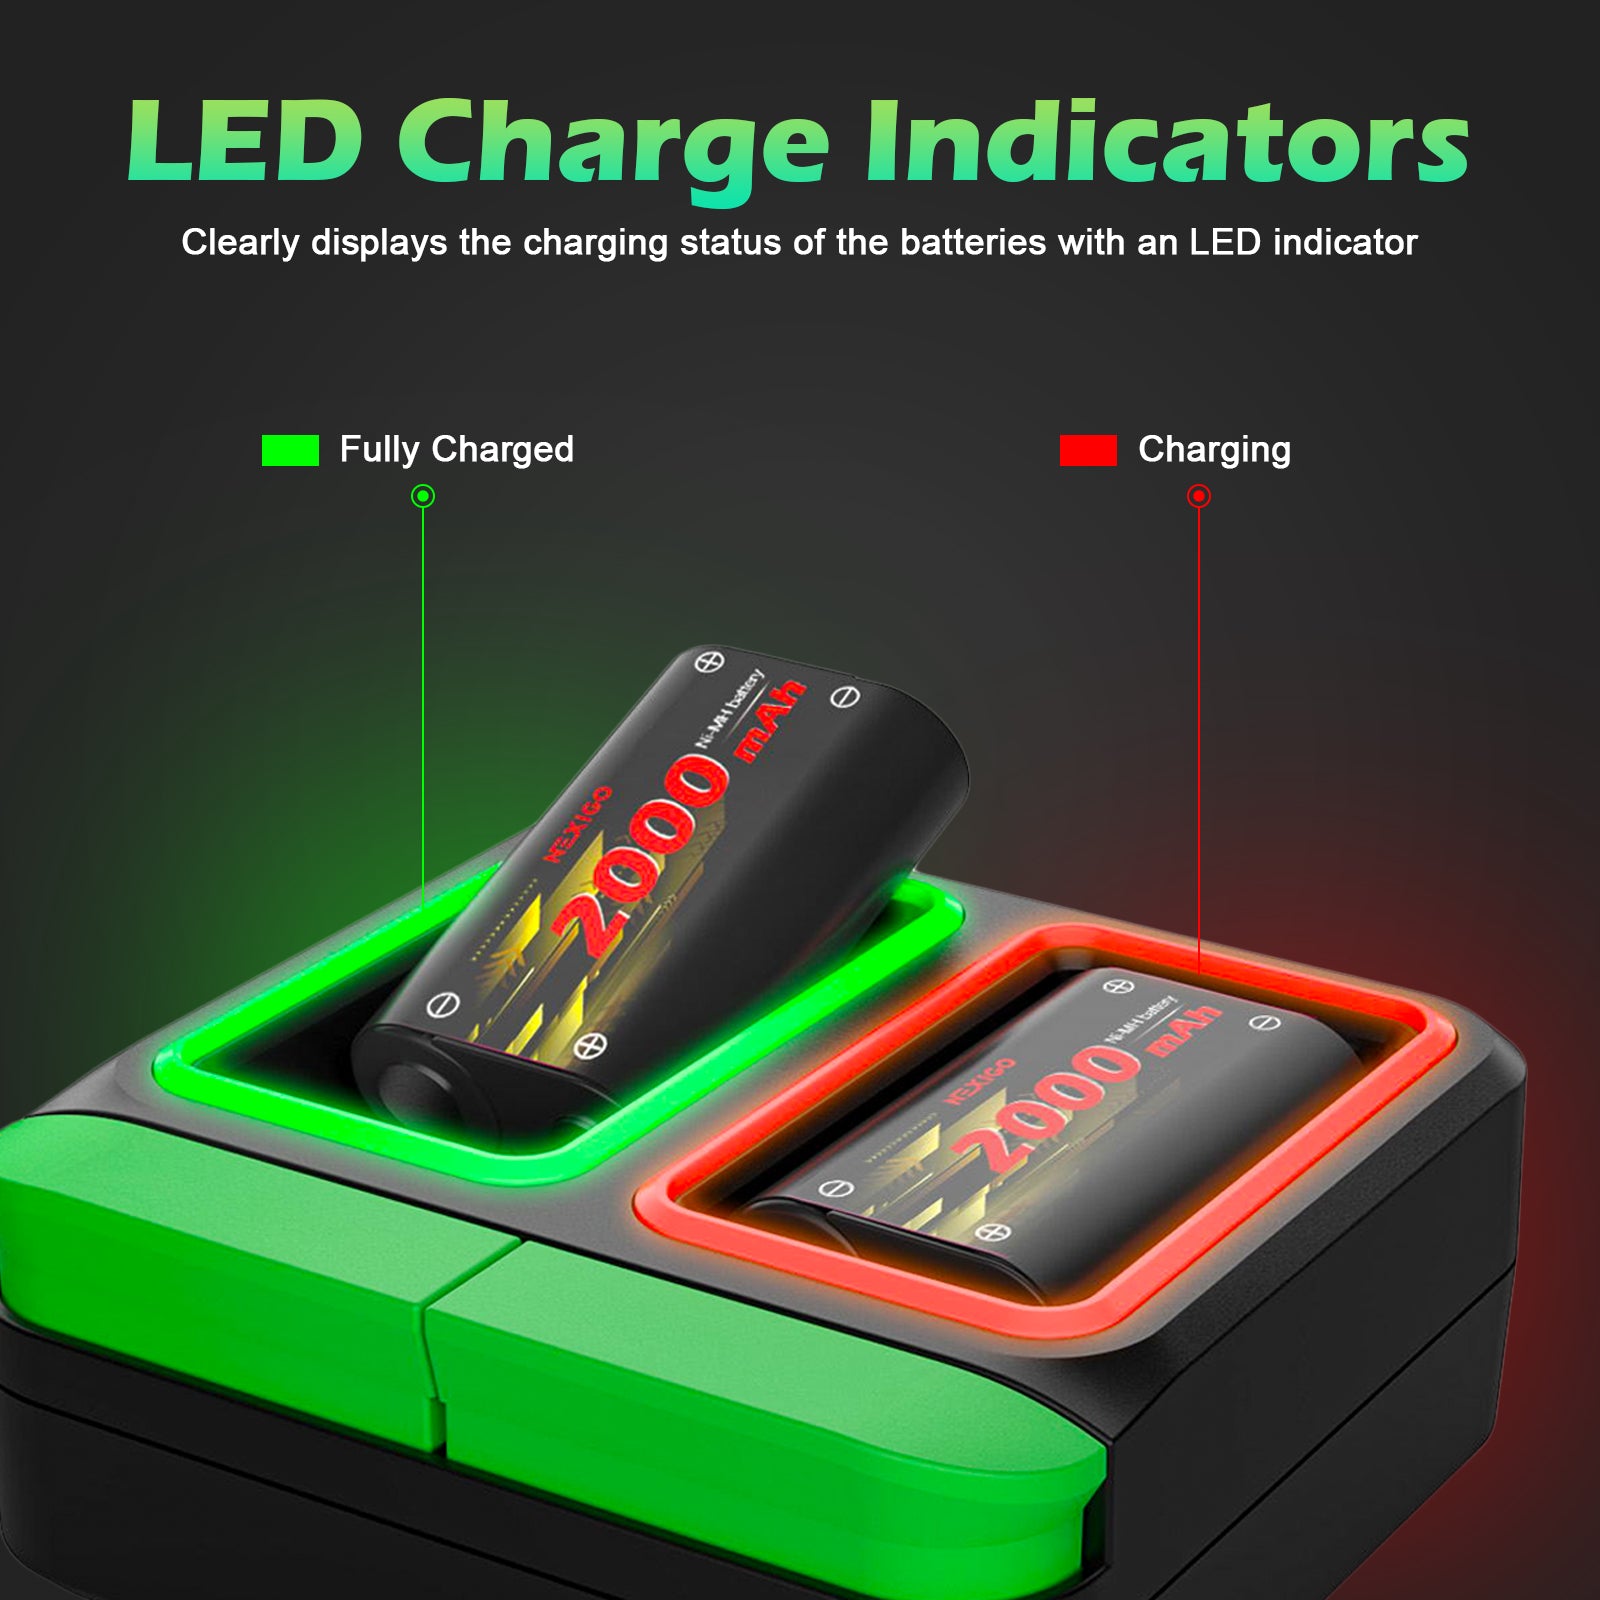 NexiGo Xbox controller battery pack has a portable charging indicator light for easy status check. 